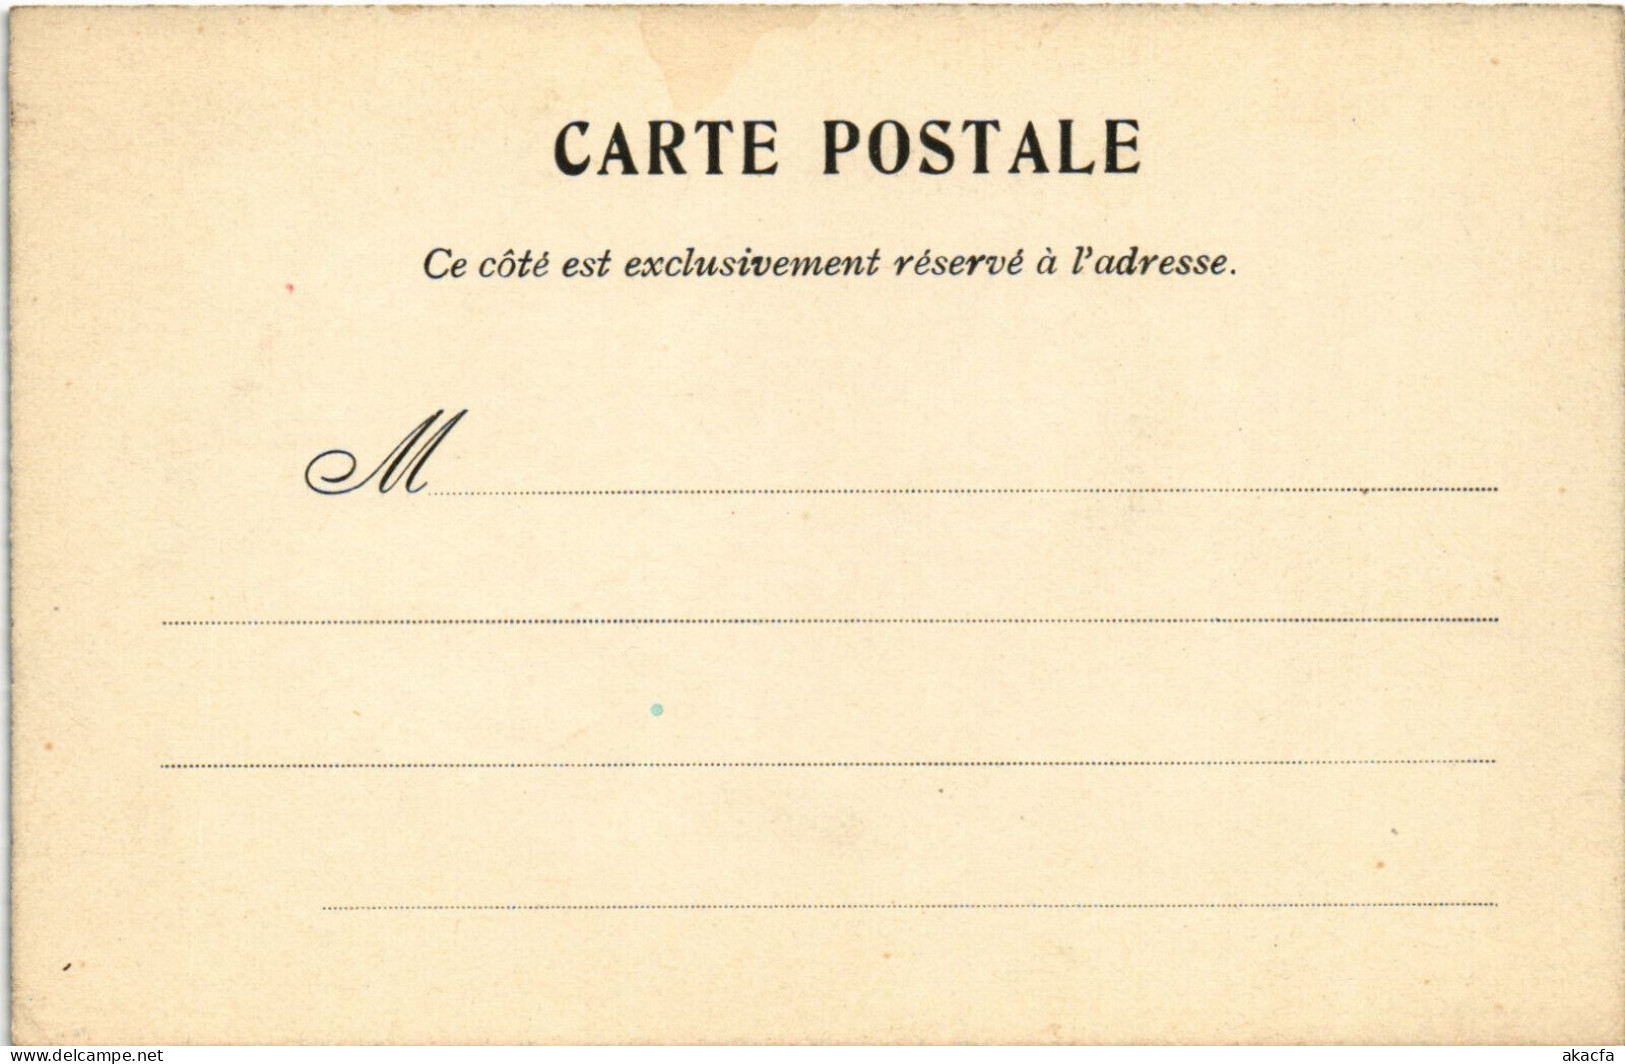 PC ARTIST SIGNED, FERNEL, CARICATURE, OEUFS MOLLETS, Vintage Postcard (b51783) - Fernel